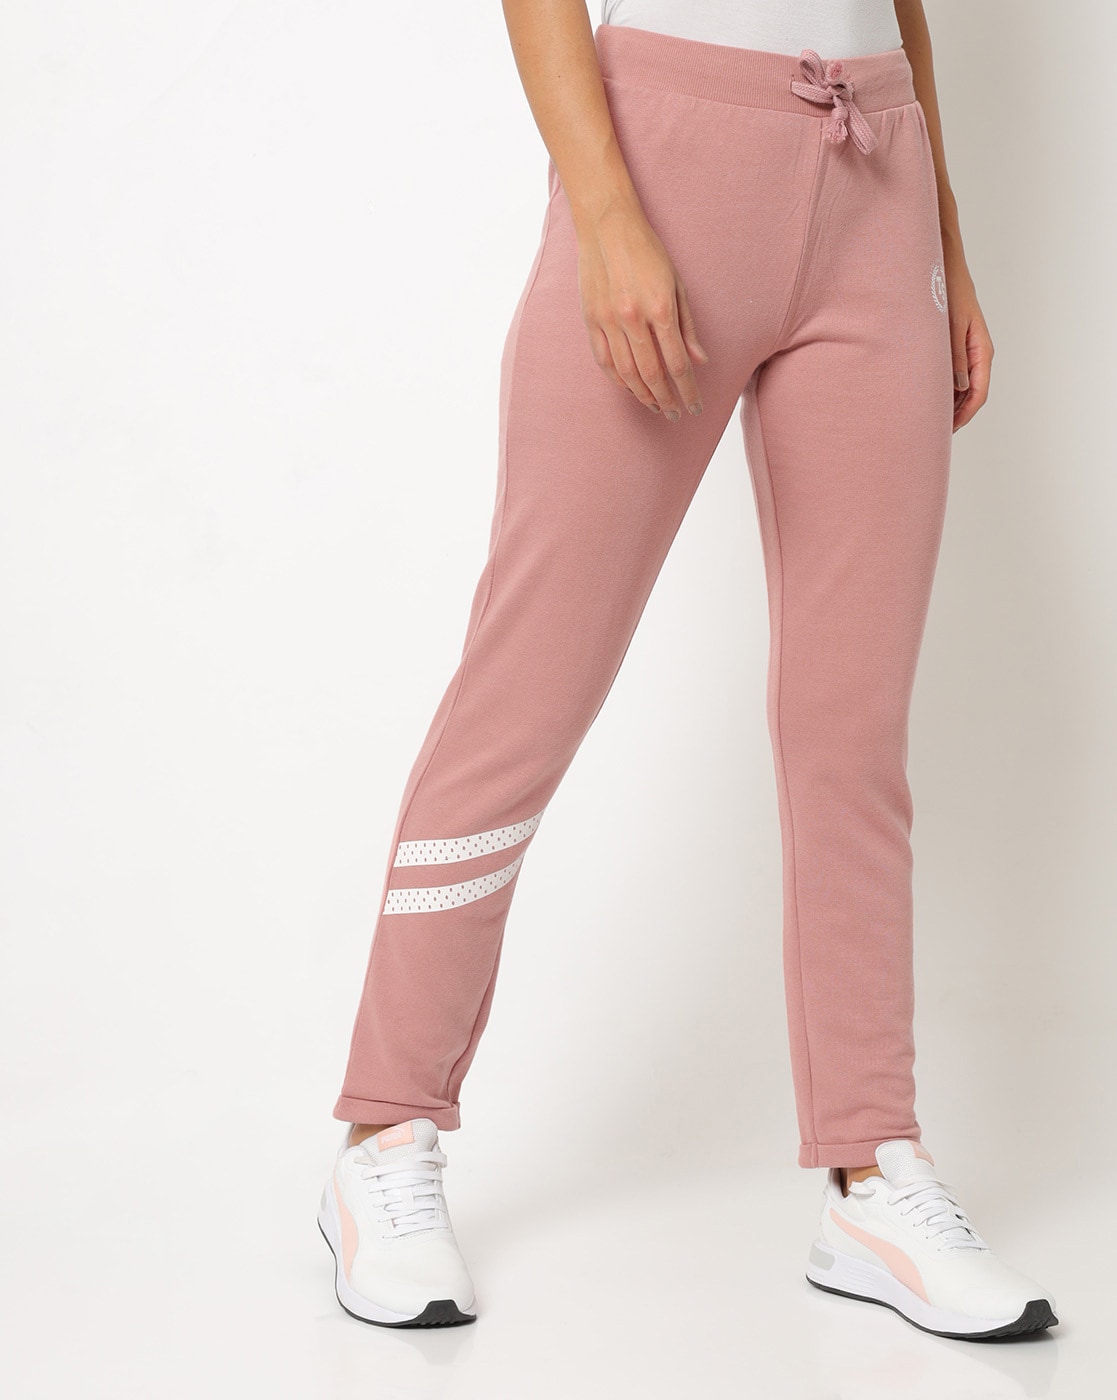 Buy Pink Track Pants for Women by Teamspirit Online  Ajiocom